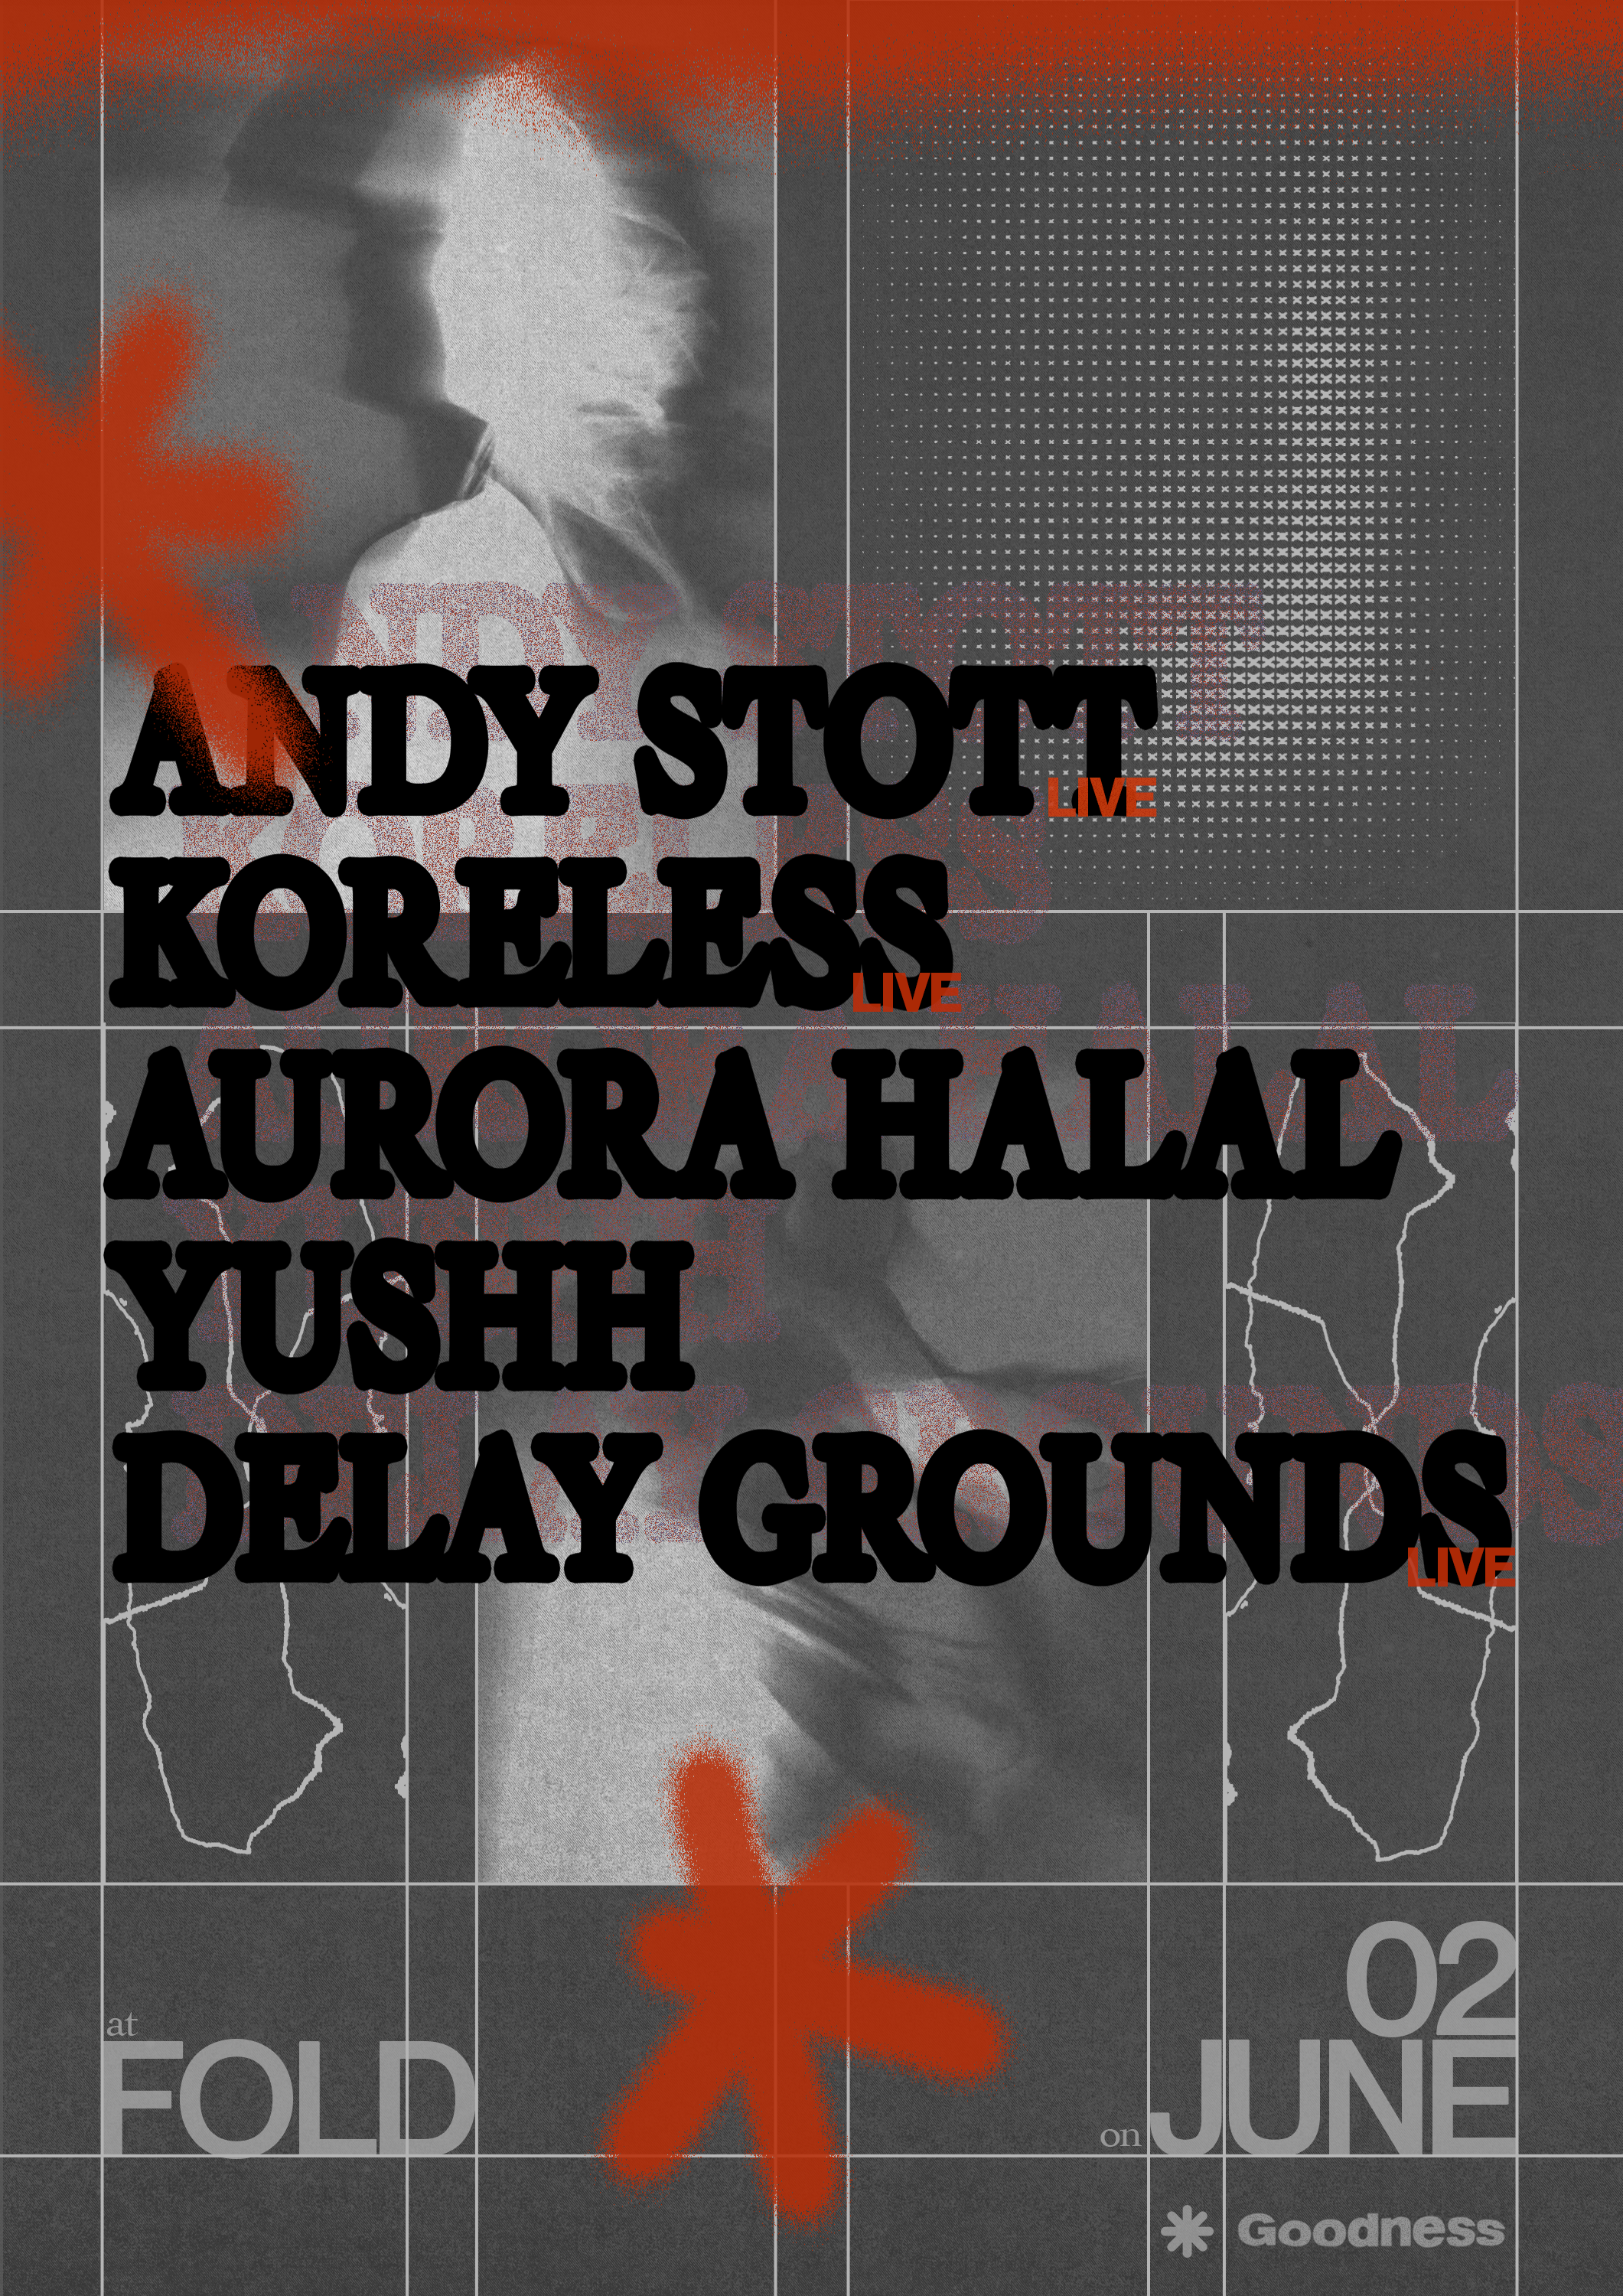 Goodness: Andy Stott [live], Koreless [live], Aurora Halal, Yushh, Delay Grounds [live] - Página frontal